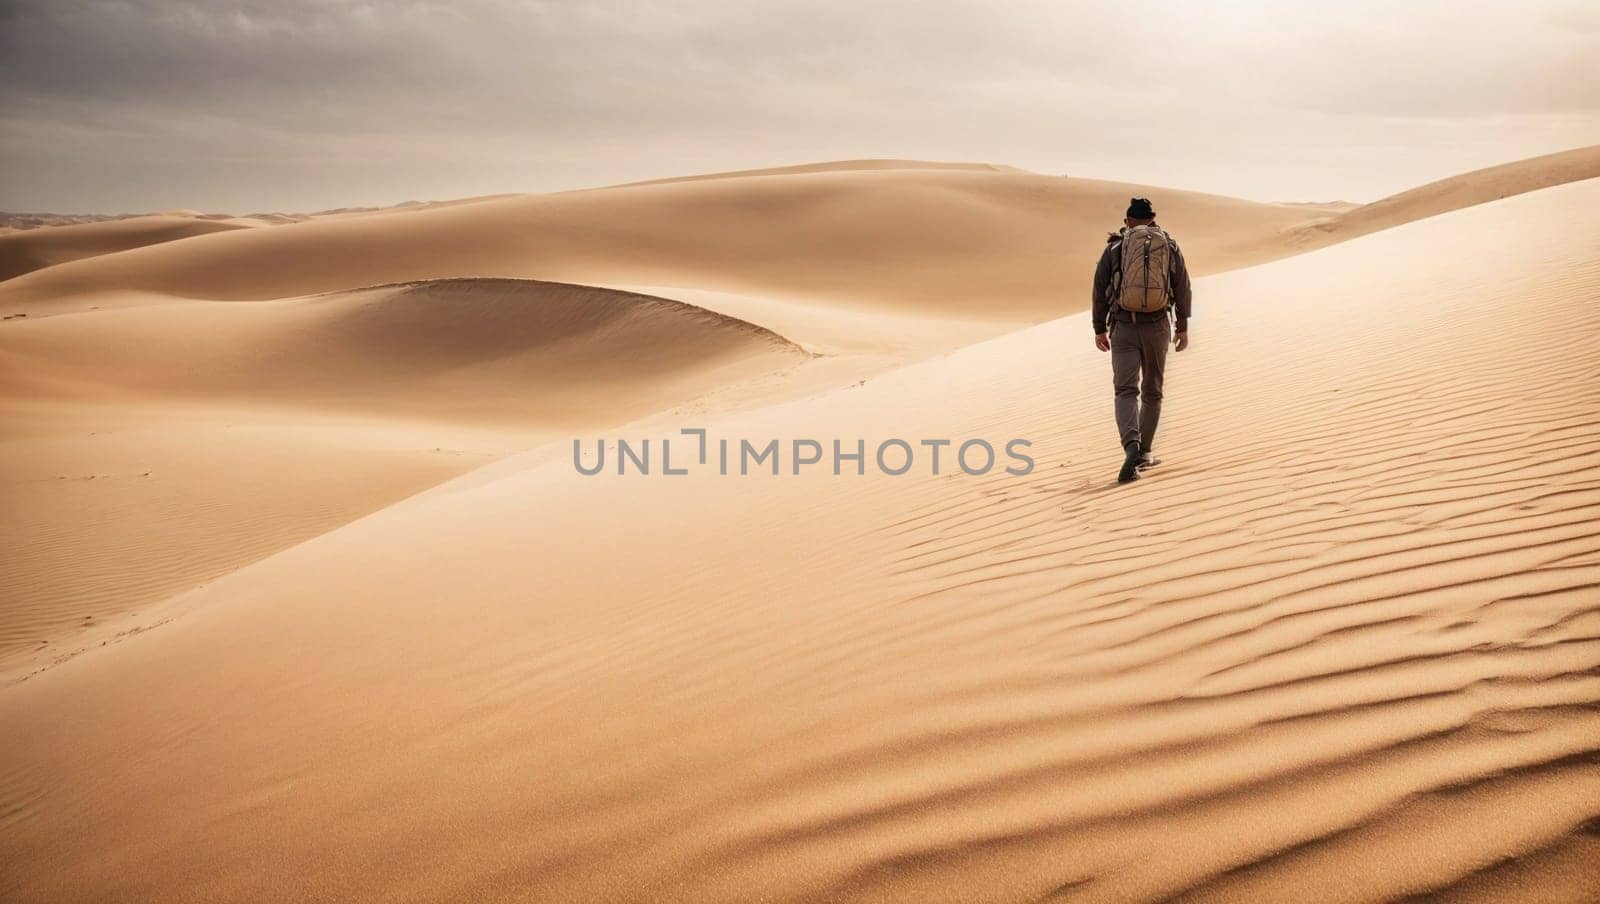 A man walks across a vast sandy desert field, with the sun casting long shadows behind him.